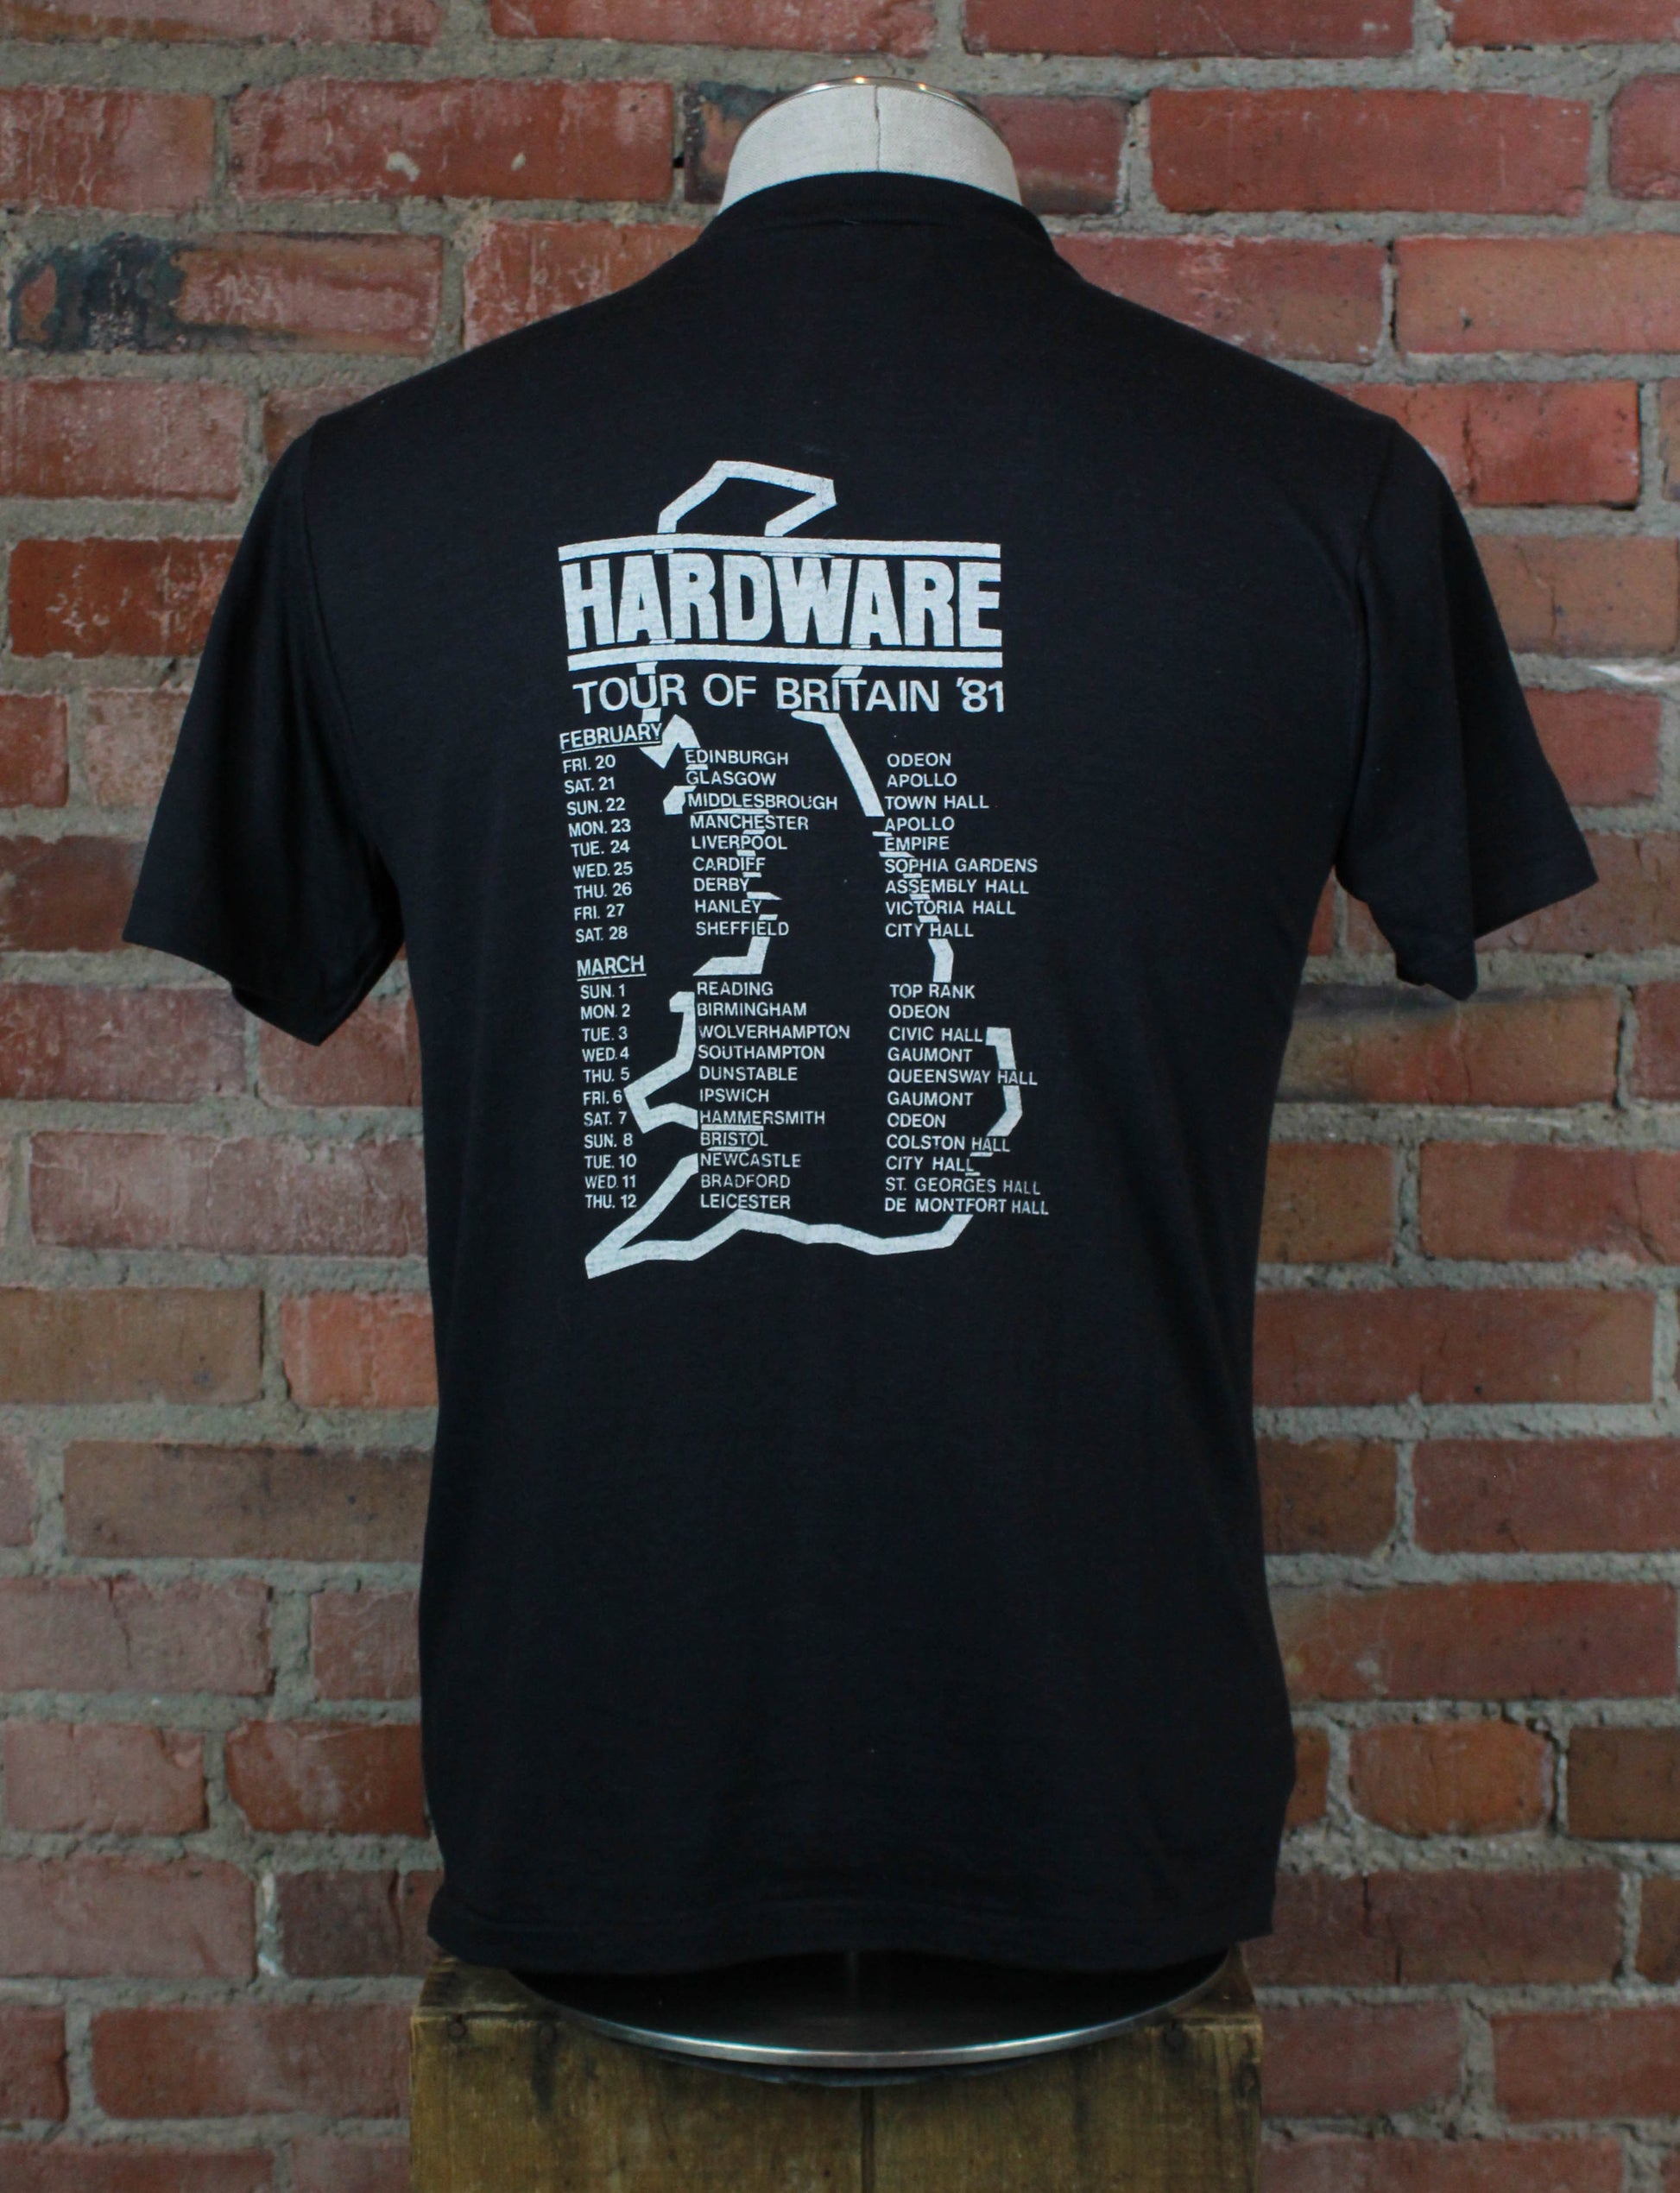 Vintage Krokus Concert T Shirt 1981 Hardware Tour Of Britain - Medium